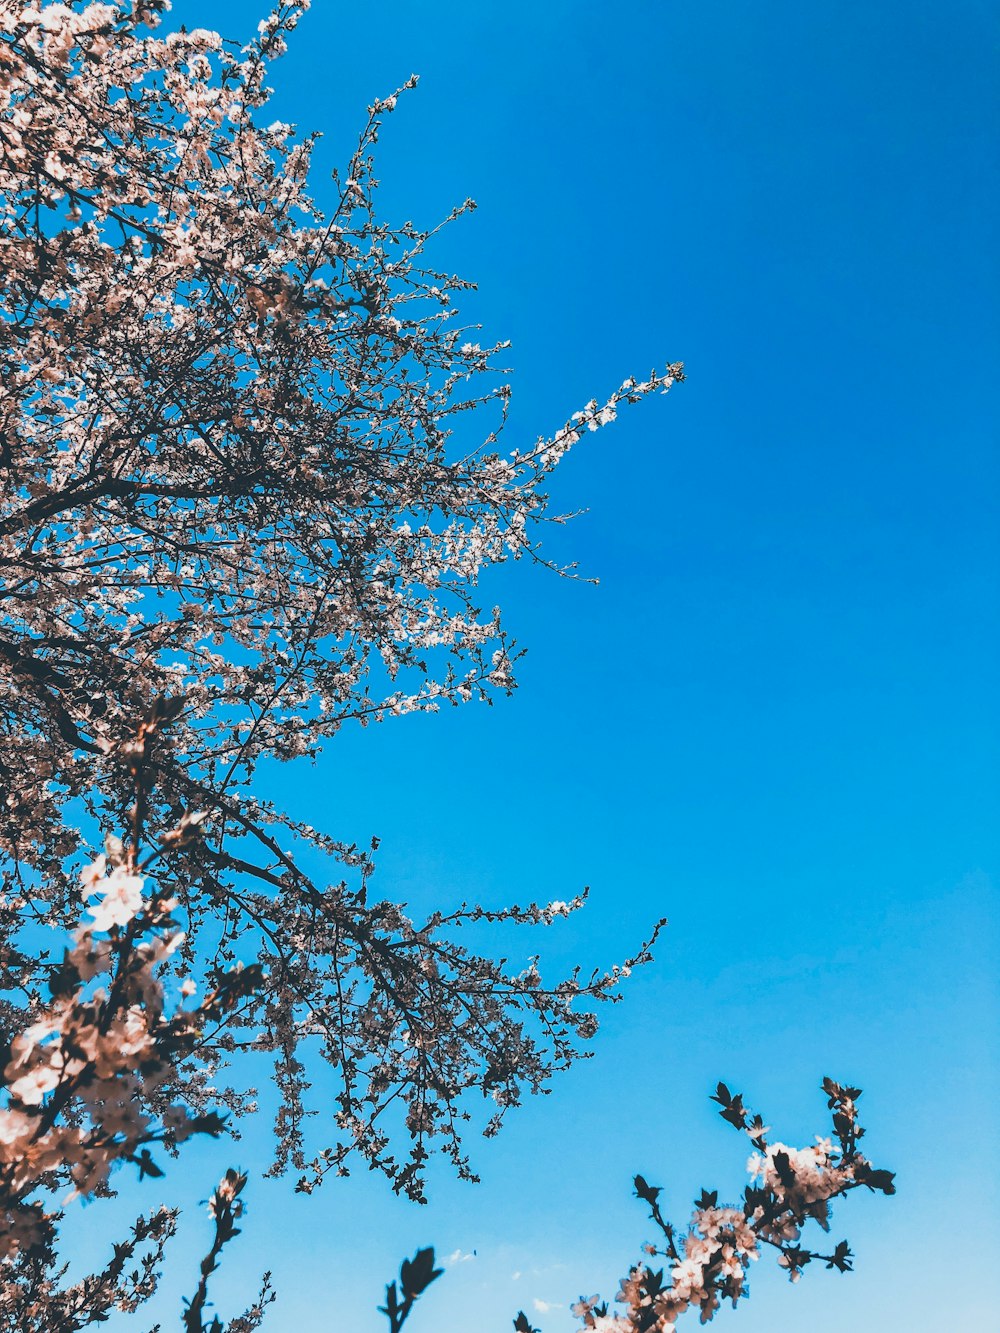 albero sotto il cielo blu photo – Photo Bleu Gratuite sur Unsplash